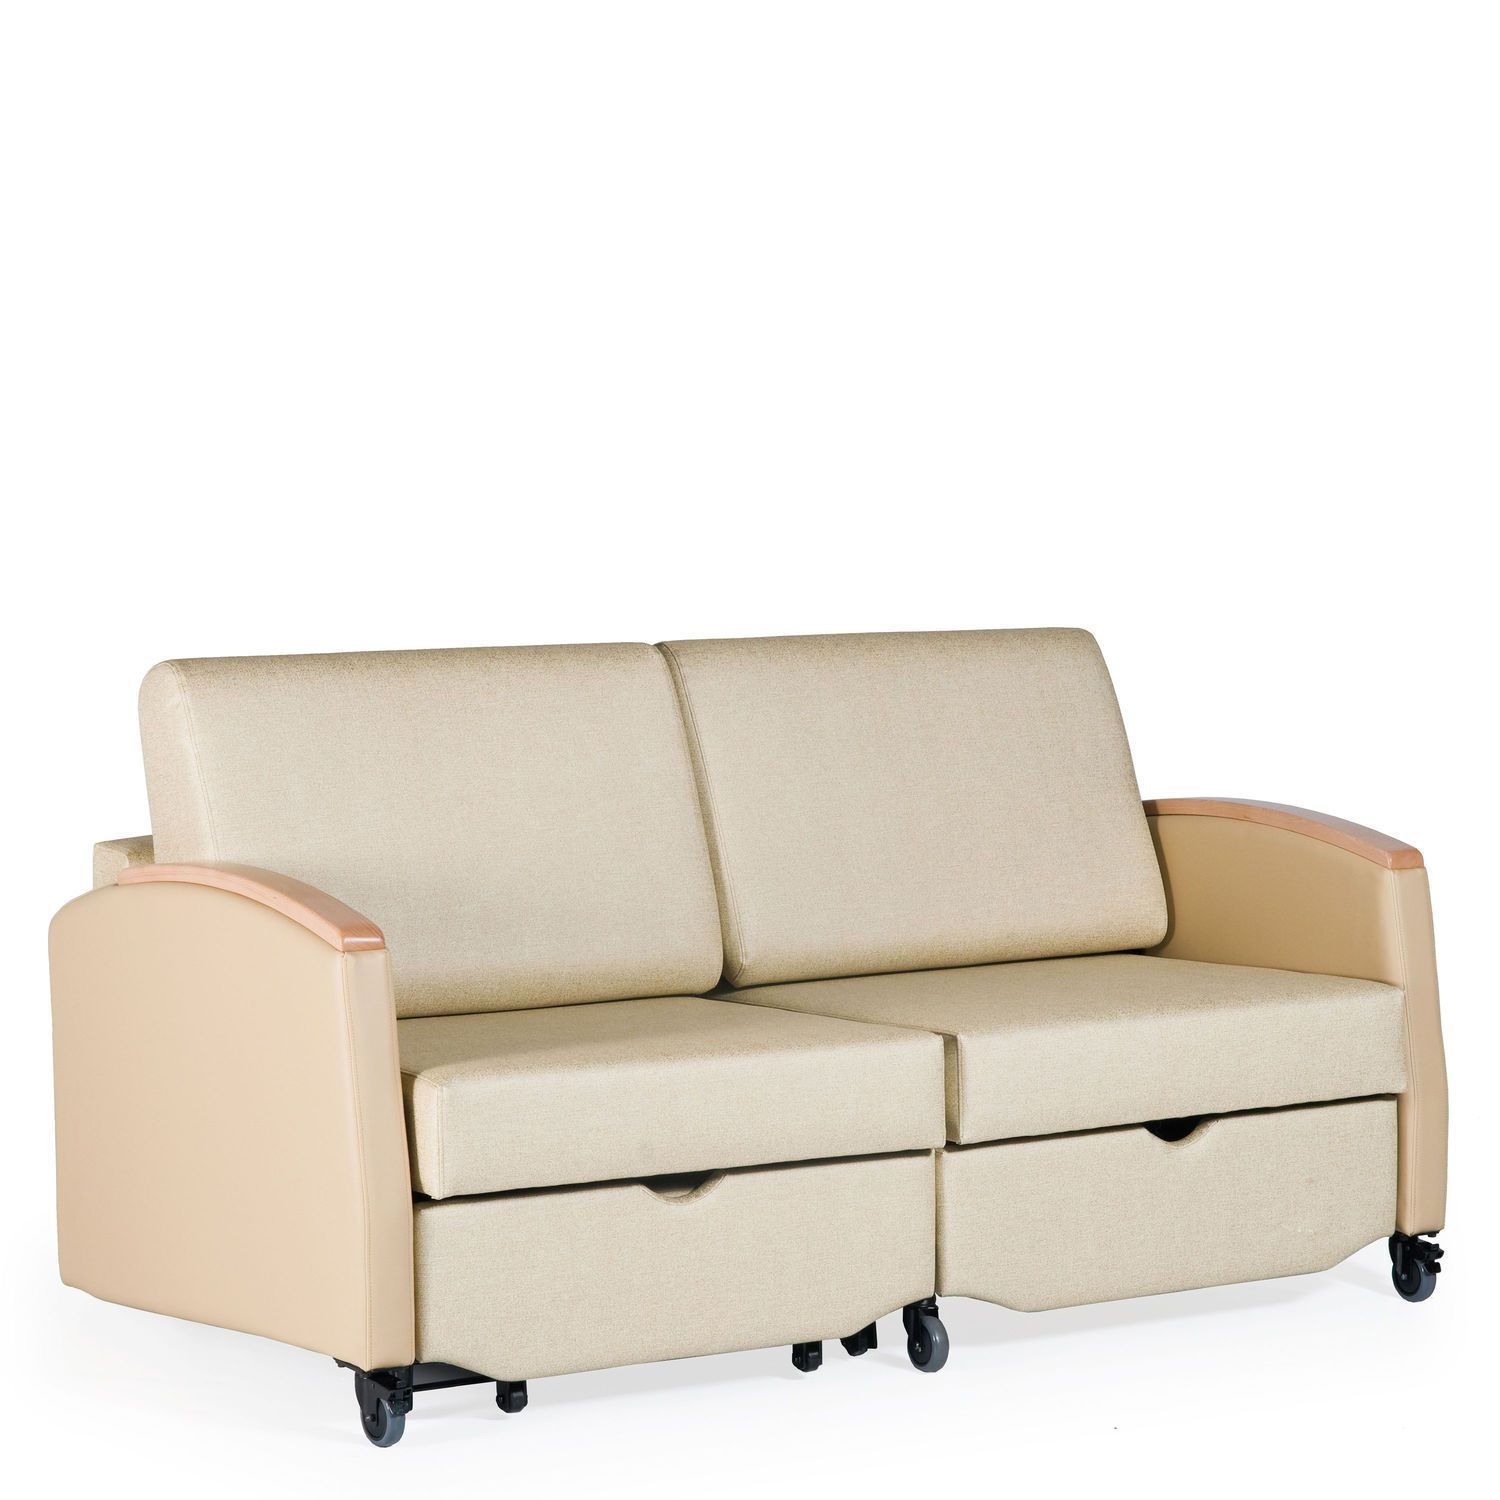 Healthcare facility sofa-bed / two seater Odeon OD2821L, Odeon OD2821R La-Z-Boy Contract Furniture